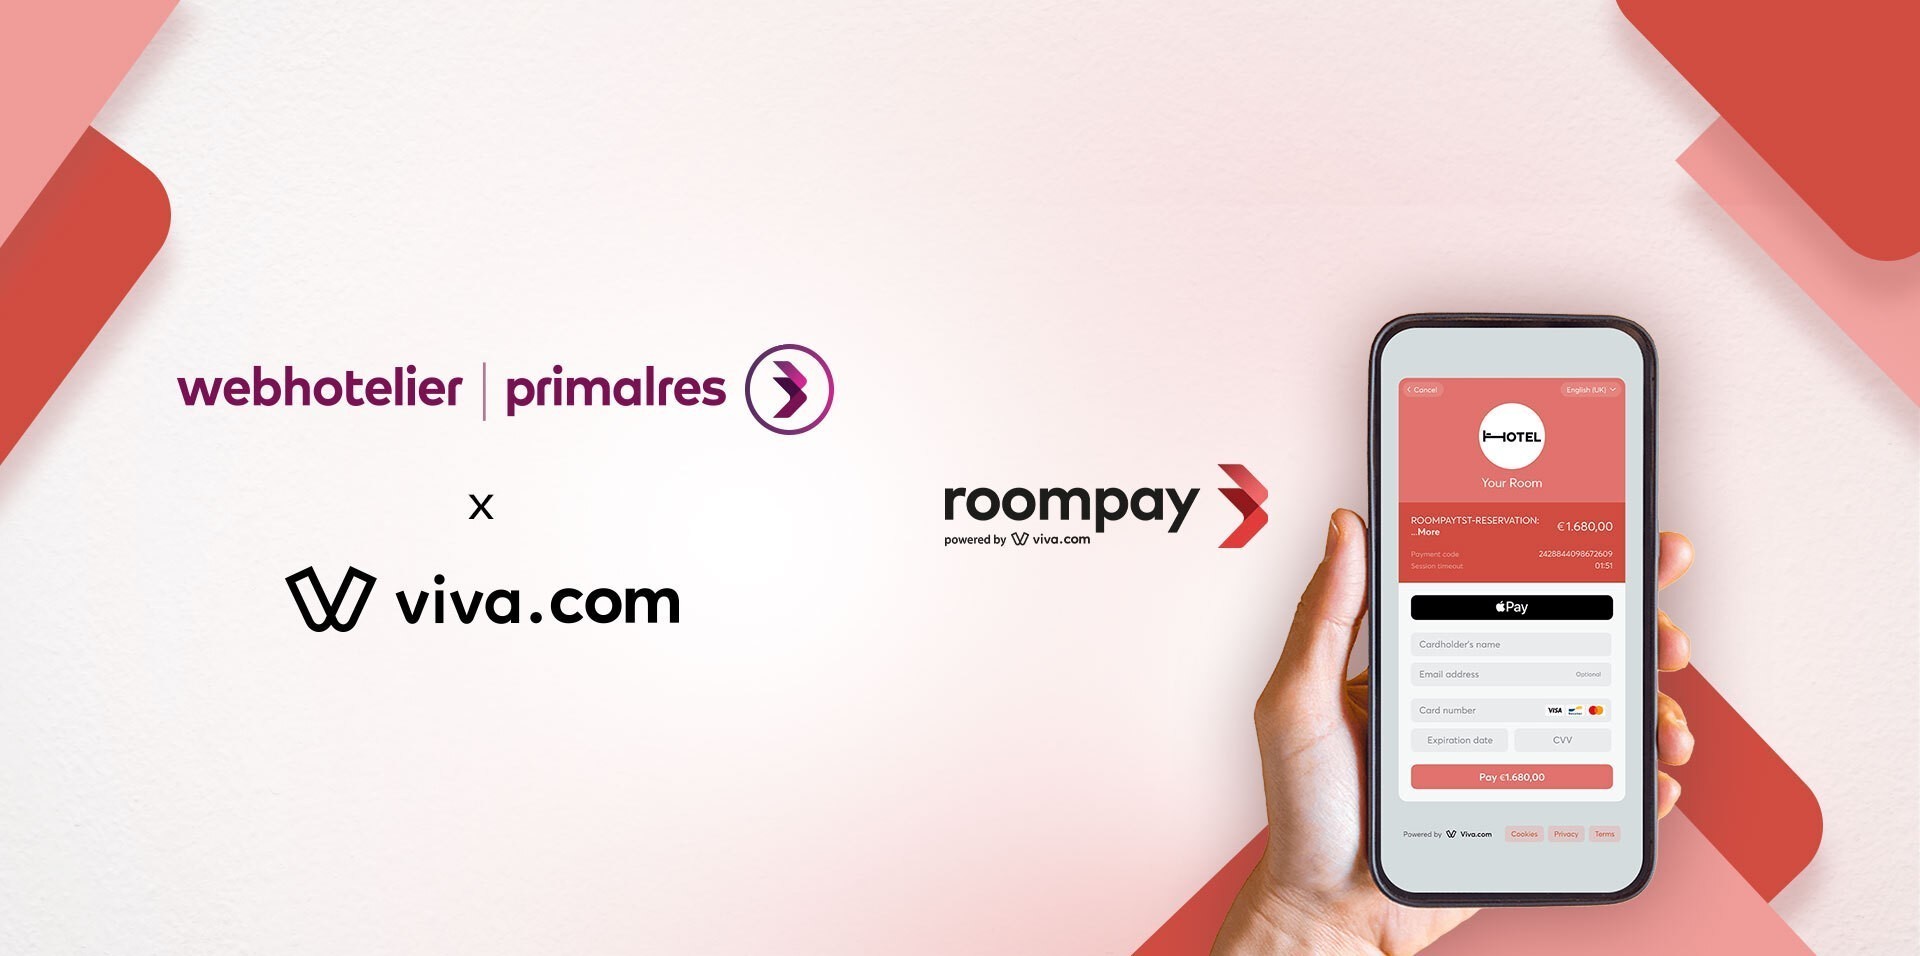 webhotelier | primalres: Δημιουργεί το roompay σε συνεργασία με τη Viva.com